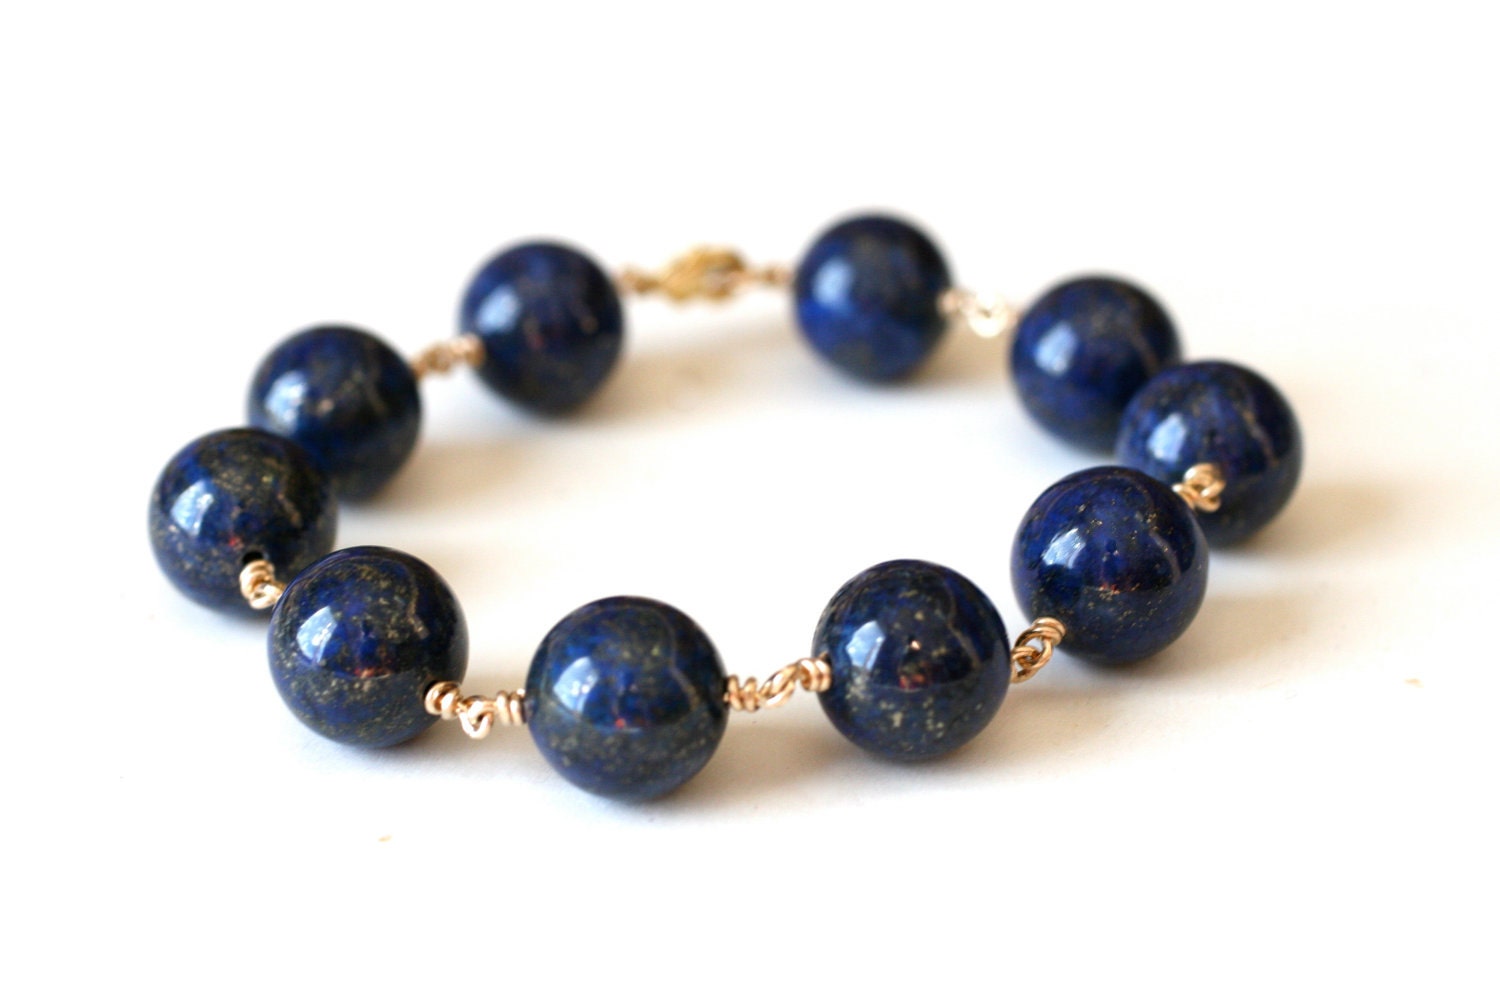 Bracelet Blue Lapis Lazuli and 14k Gold Filled - Midnight, Bold, Navy, Under 50 dollars - WrennJewelry